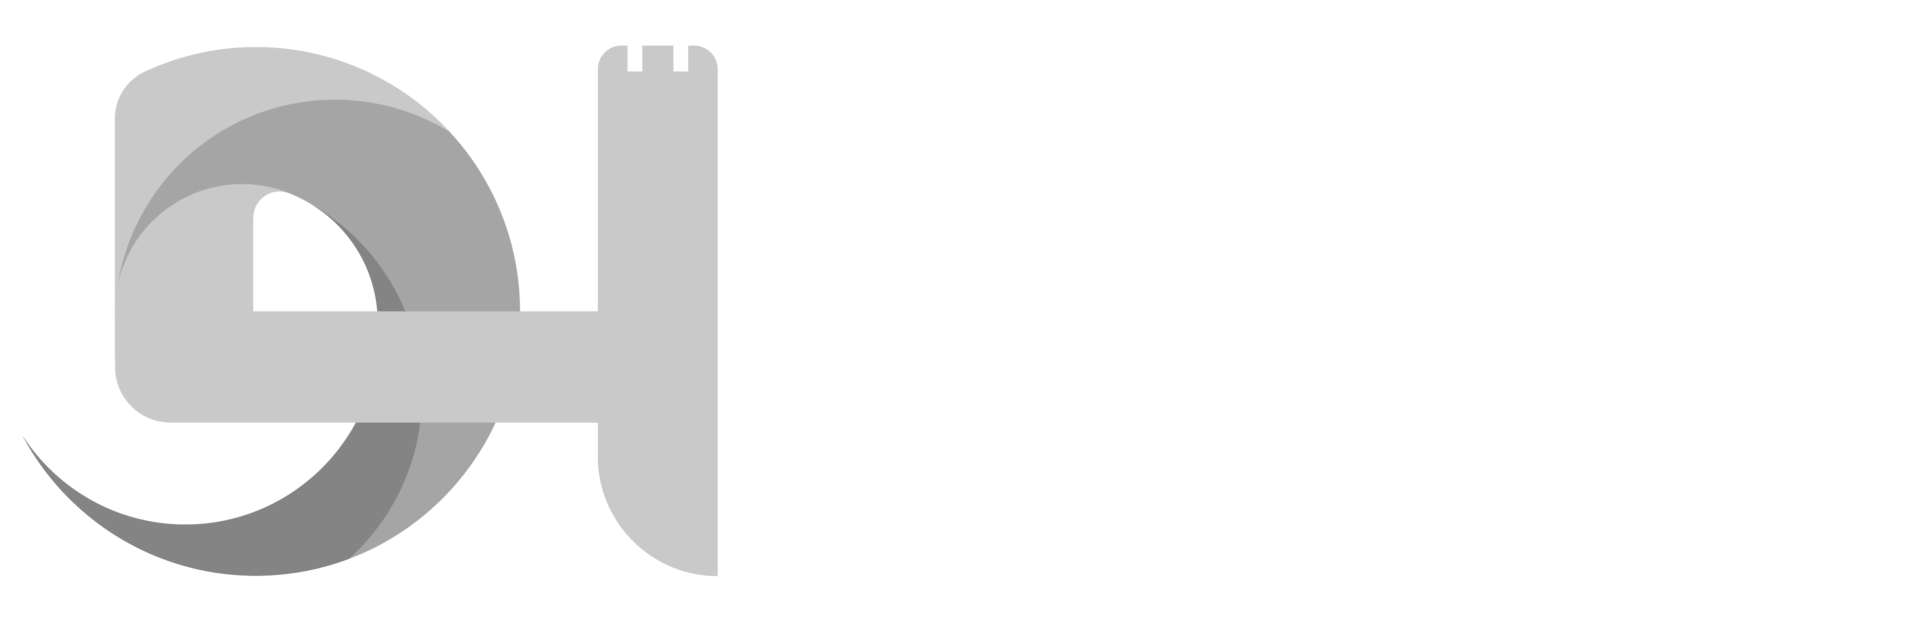 Logotipo Decohinchables negativo